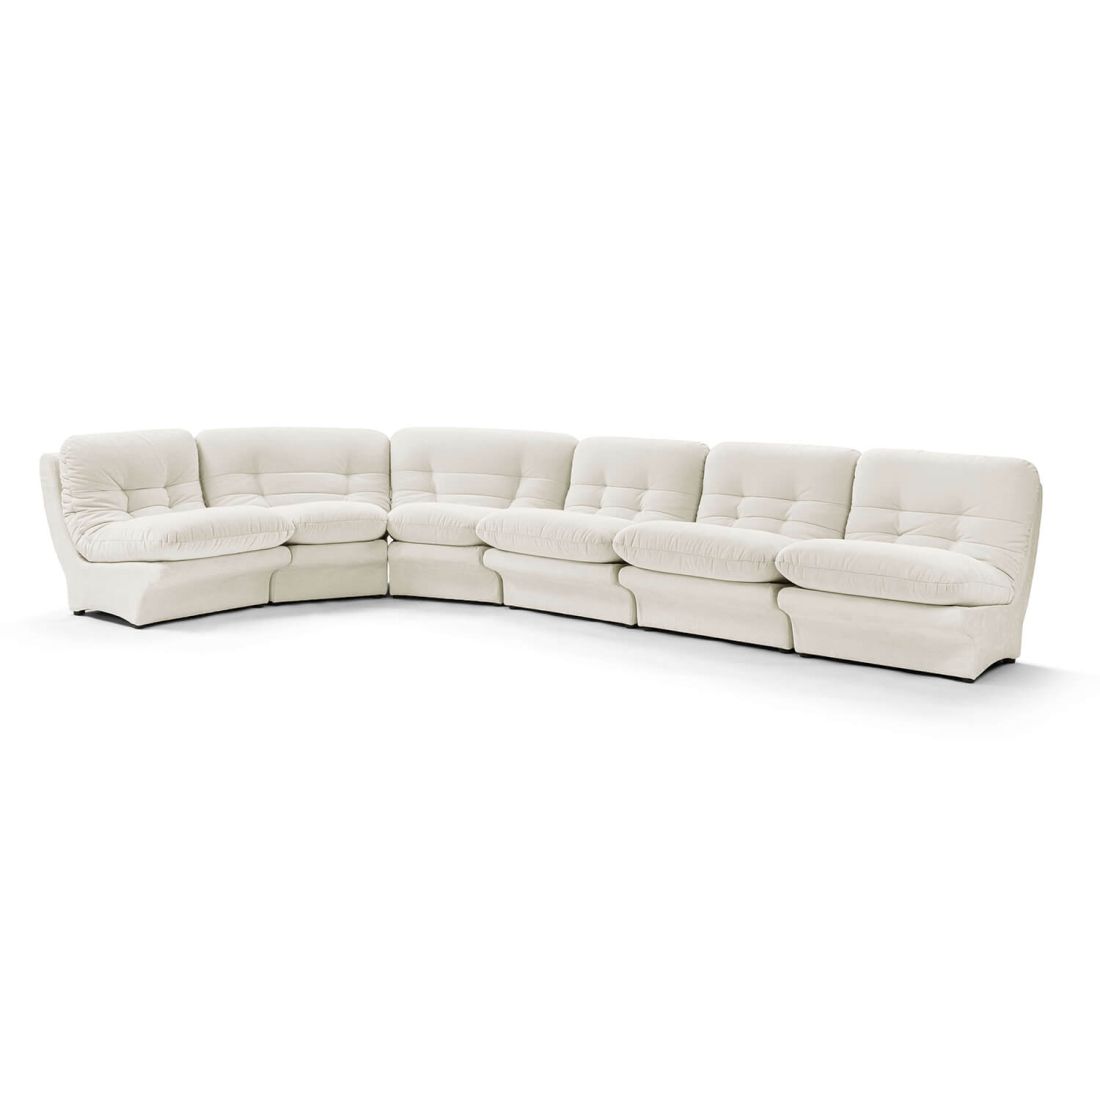 Carsons Mid Century Curved Modular Sectional Sofa | Combination 003 Performance Felt-Natural | Eternity Modern